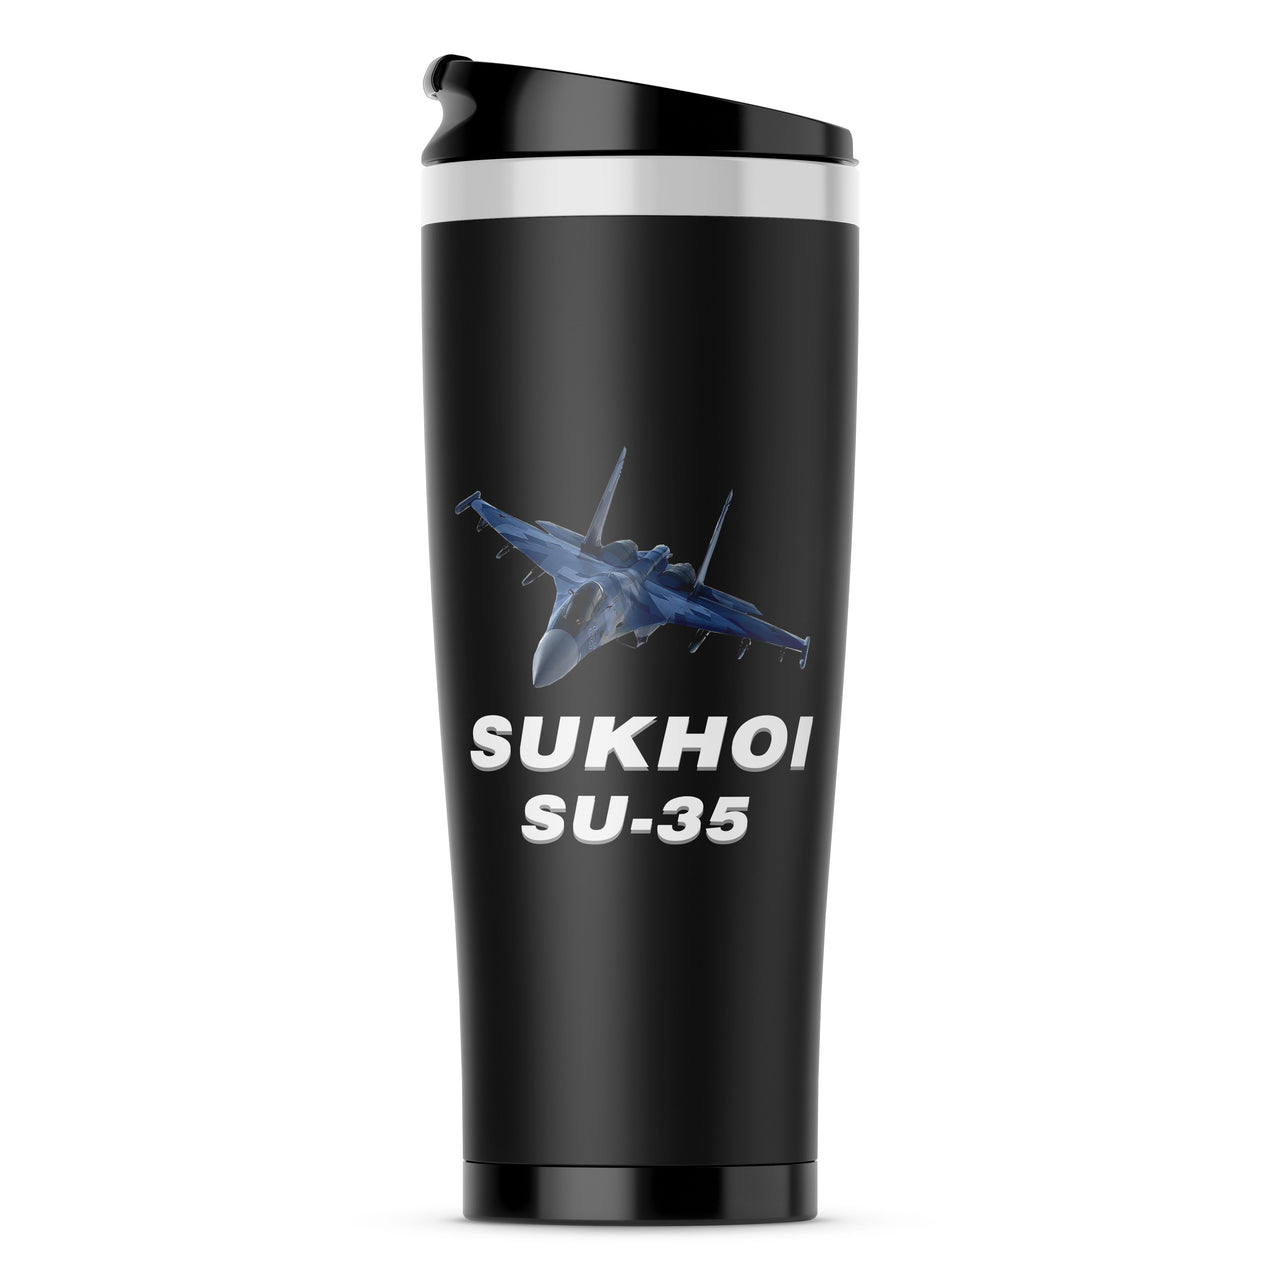 The Sukhoi SU-35 Designed Travel Mugs